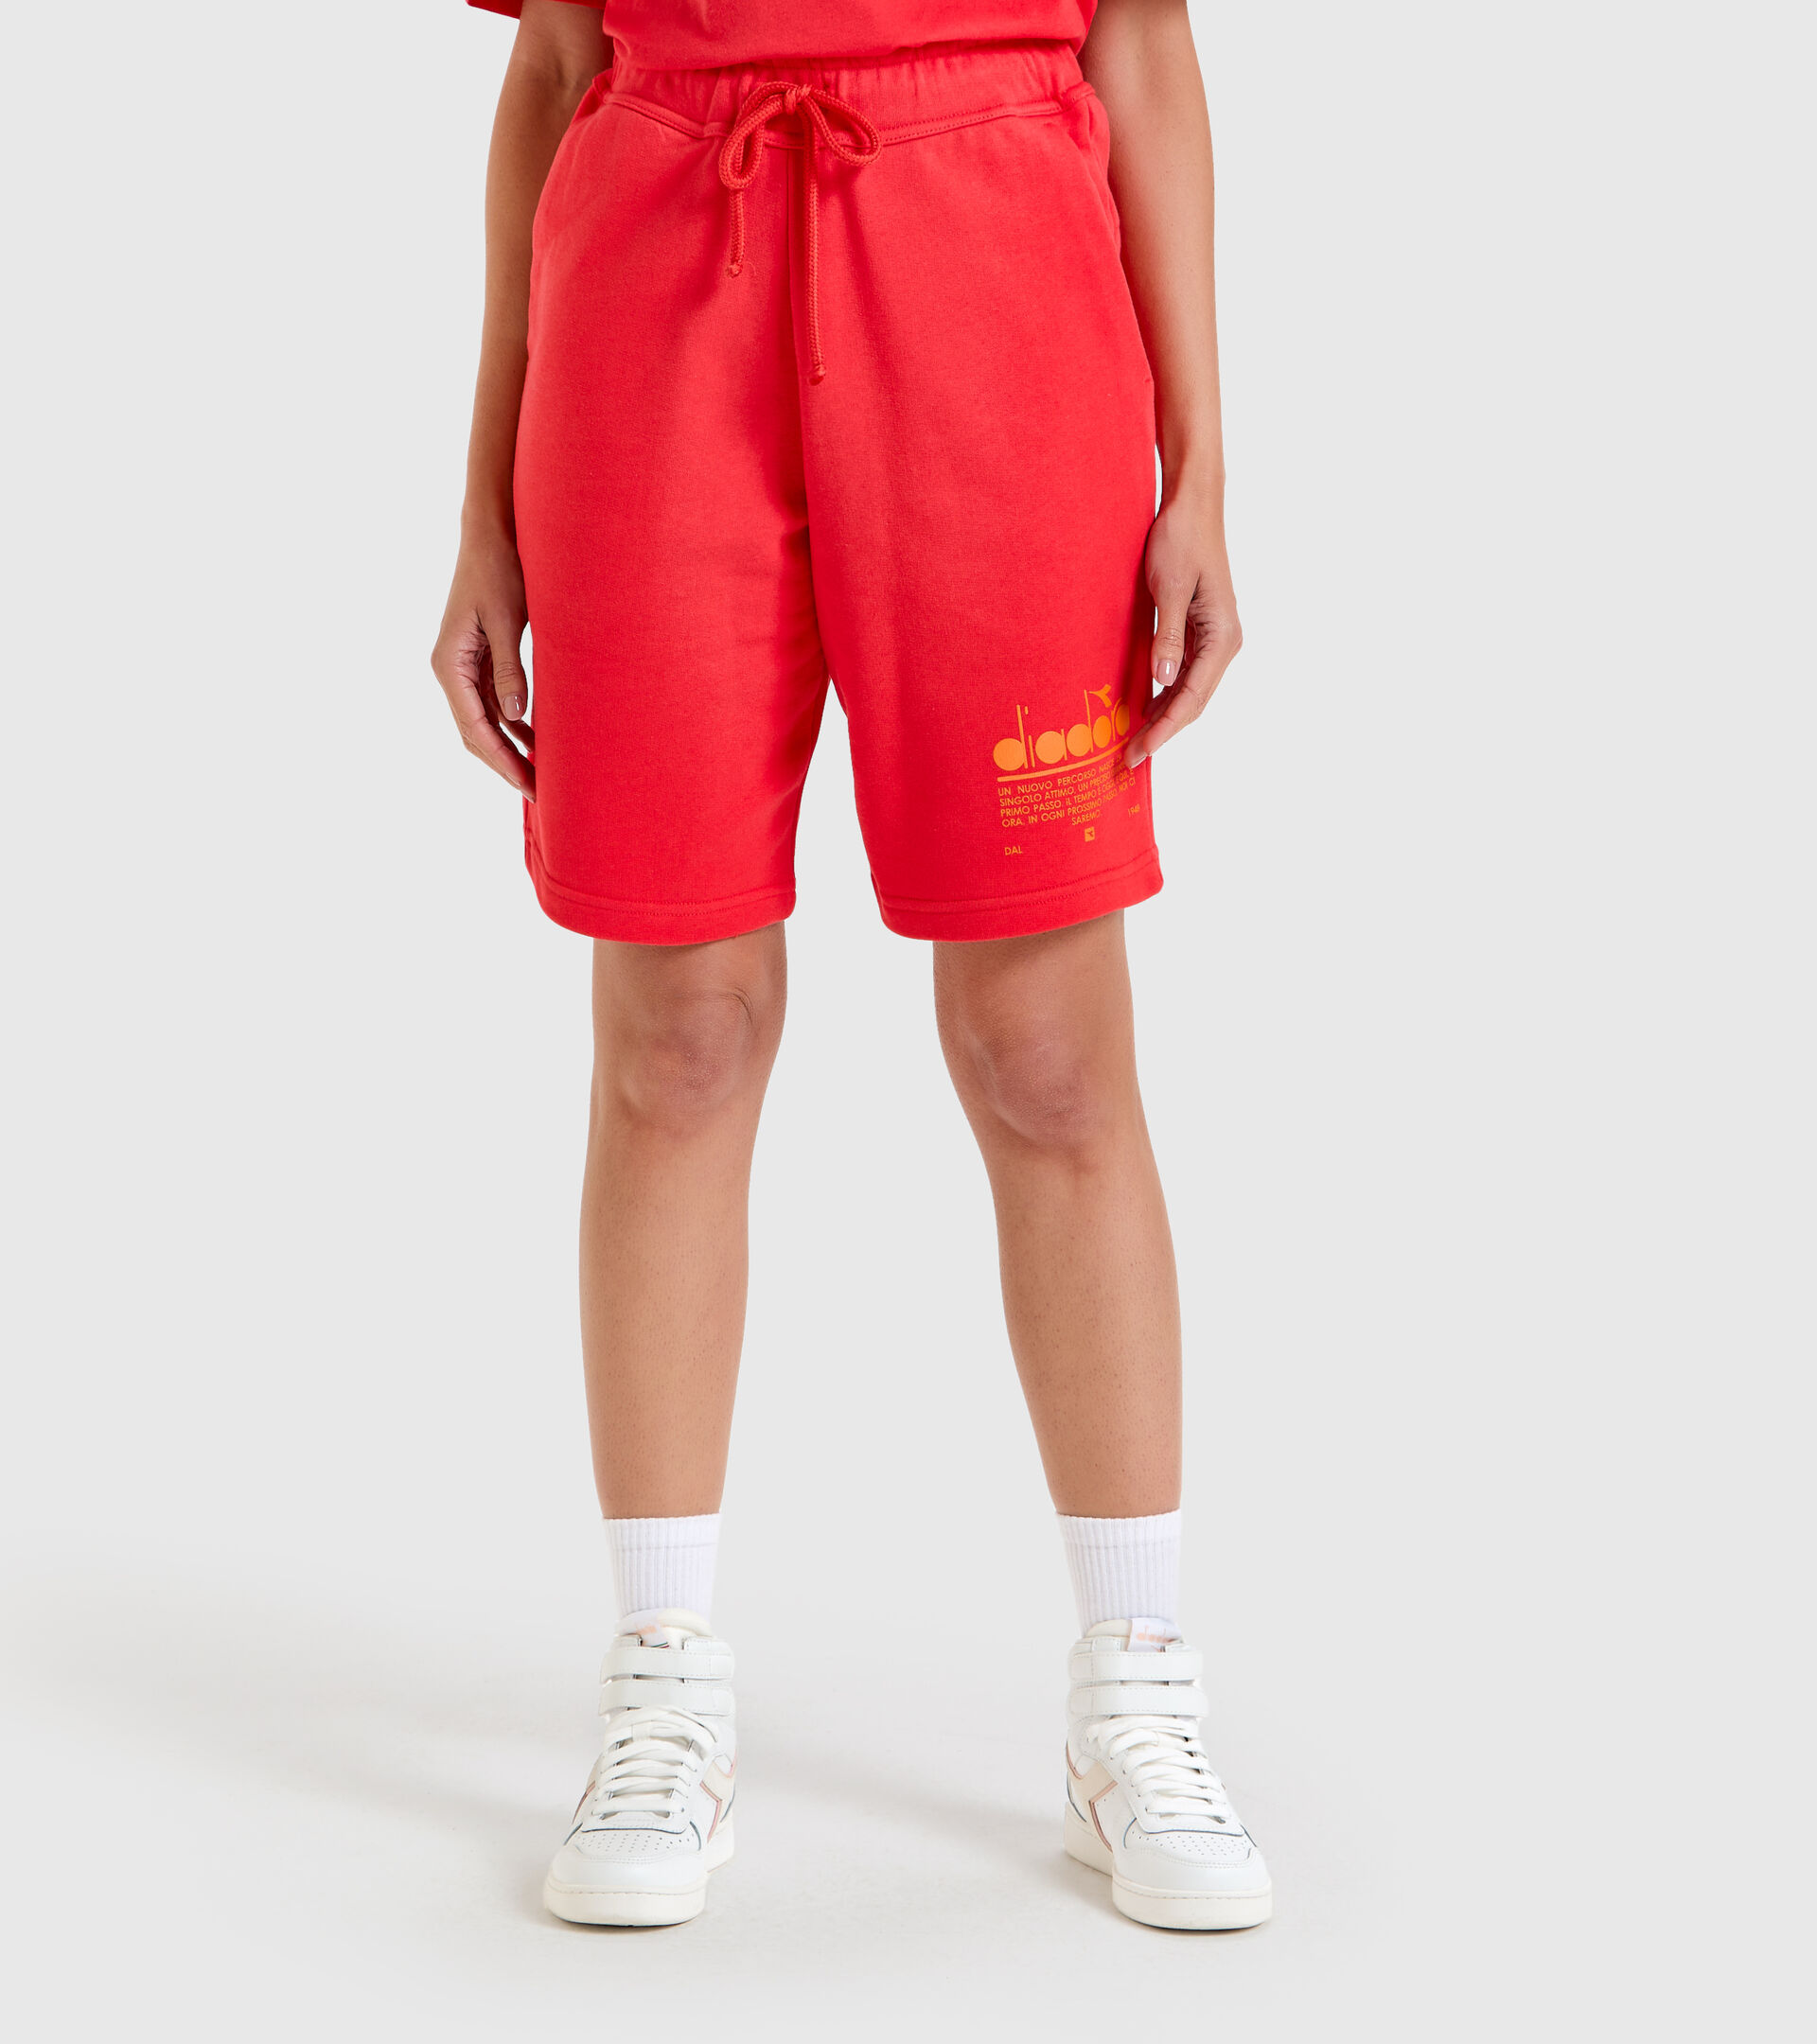 Cotton shorts - Unisex BERMUDA MANIFESTO POPPY RED - Diadora